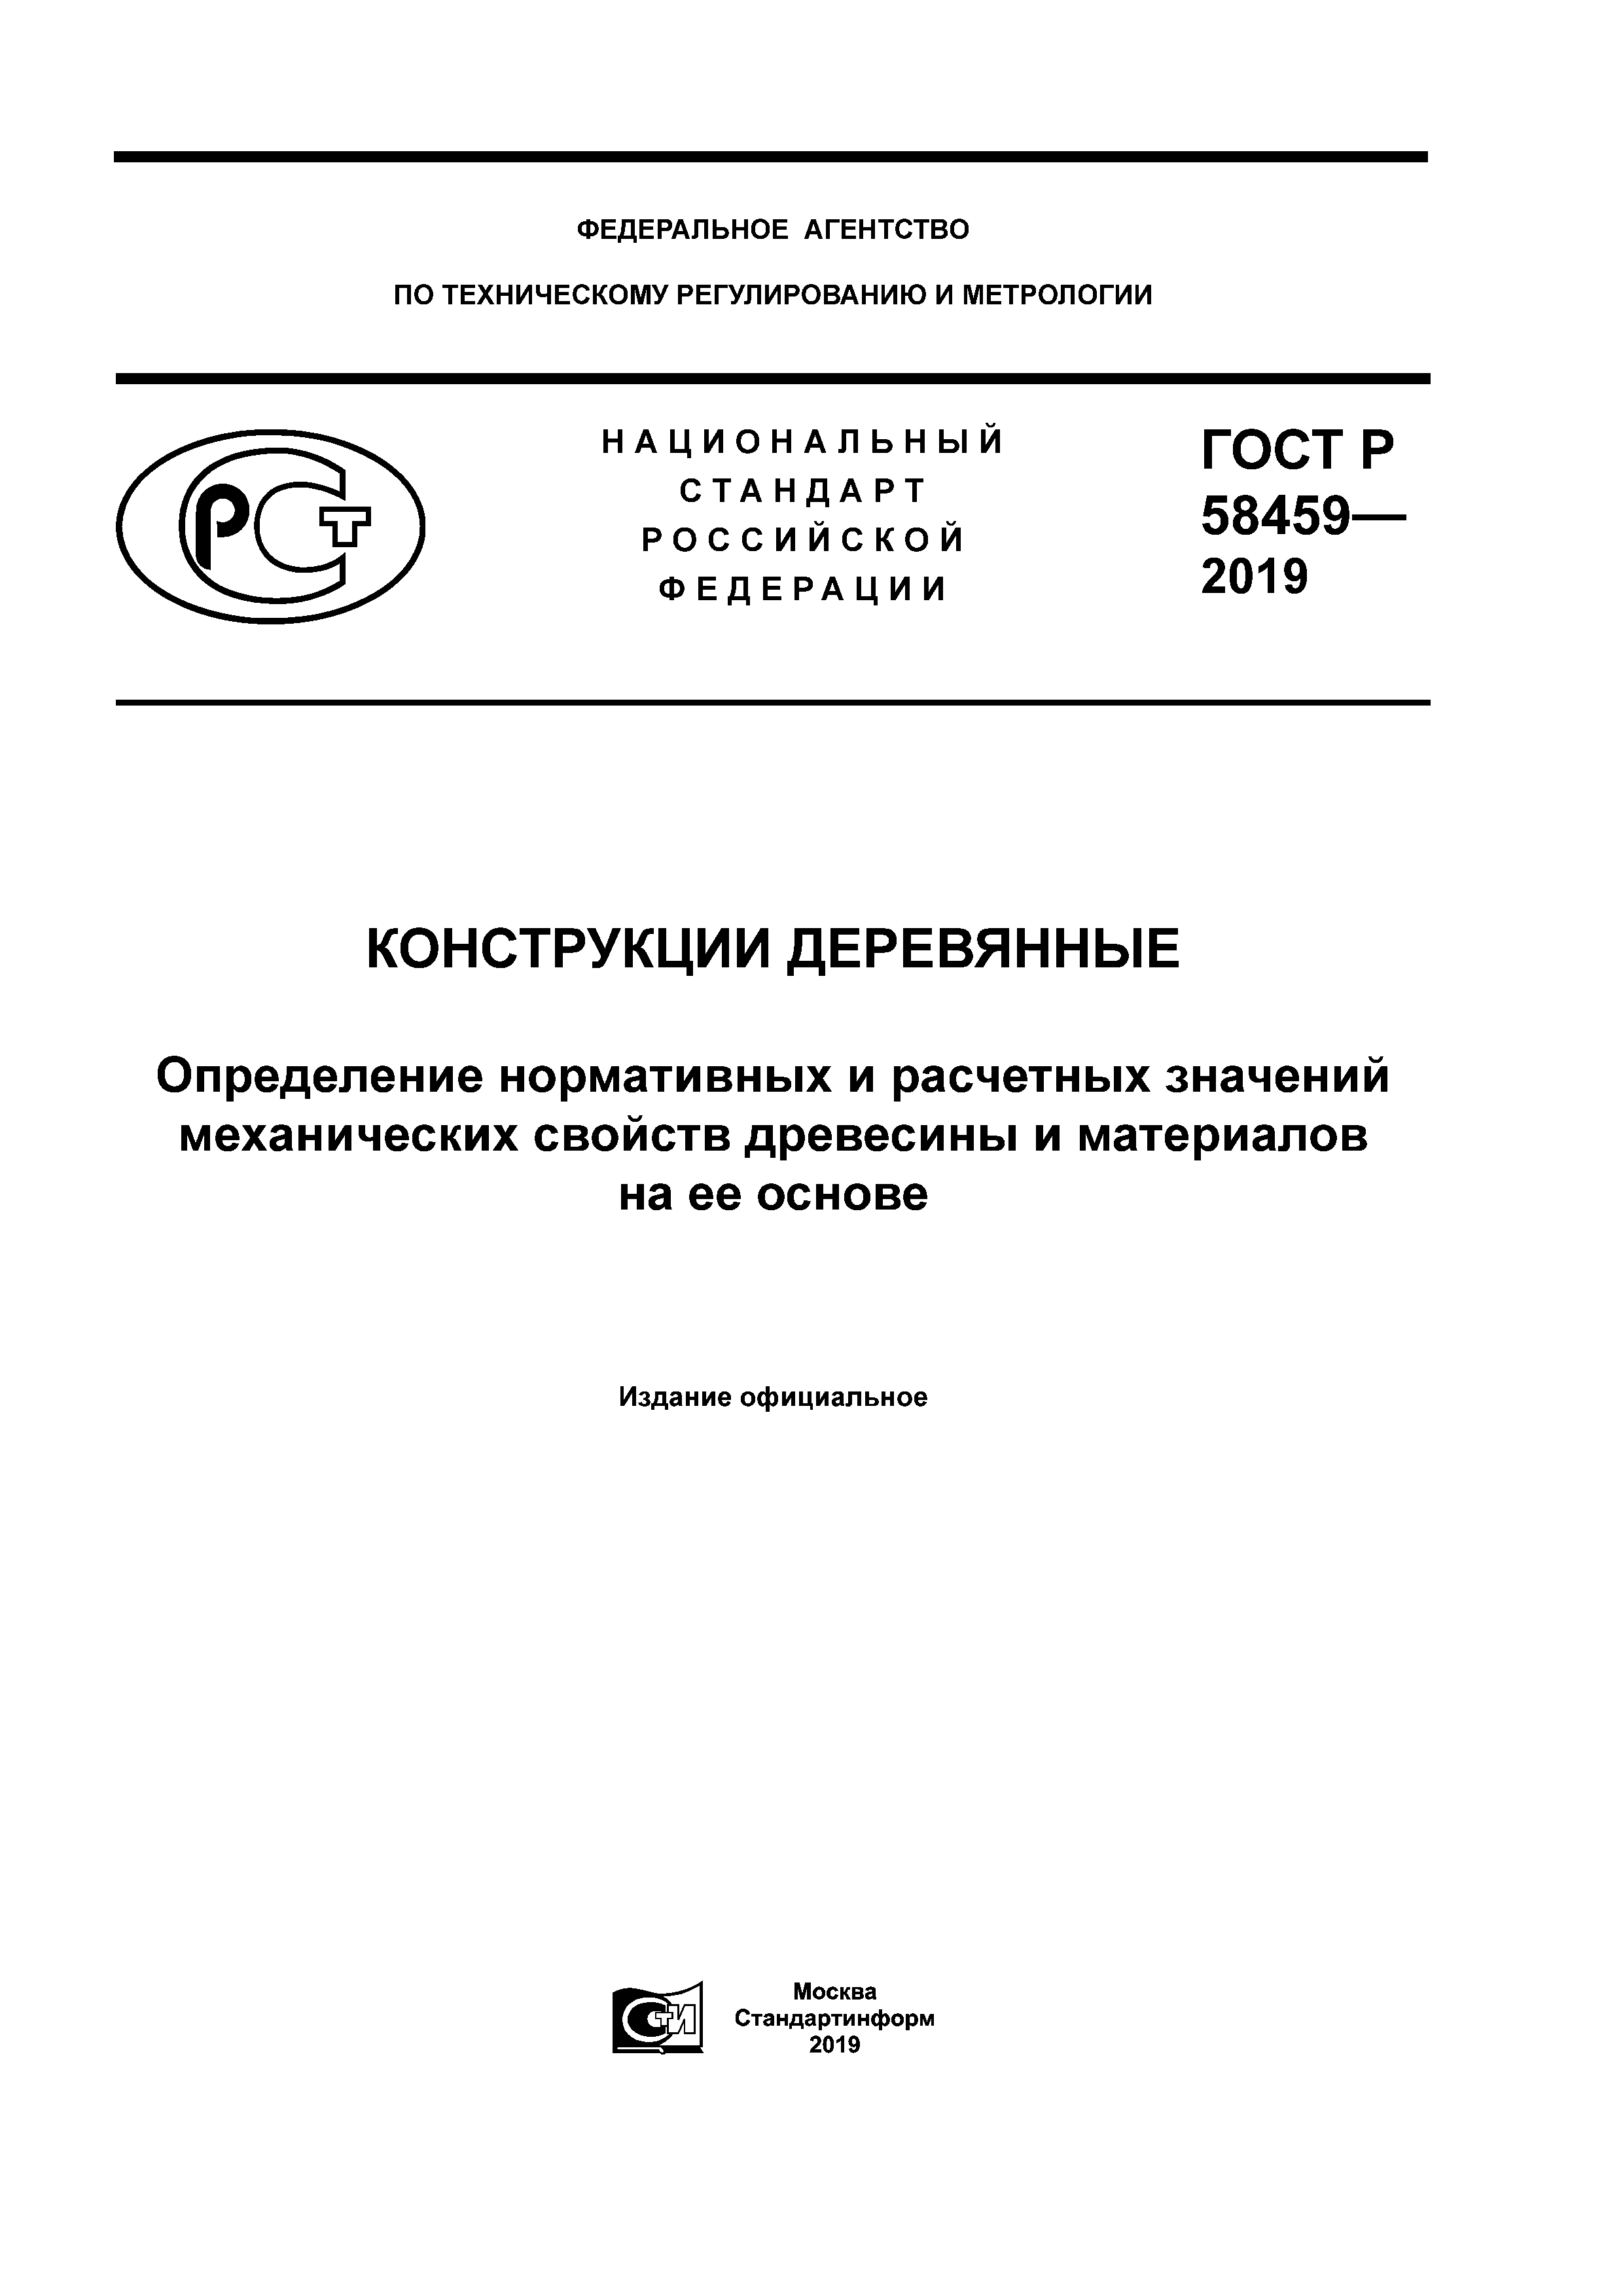 ГОСТ Р 58459-2019